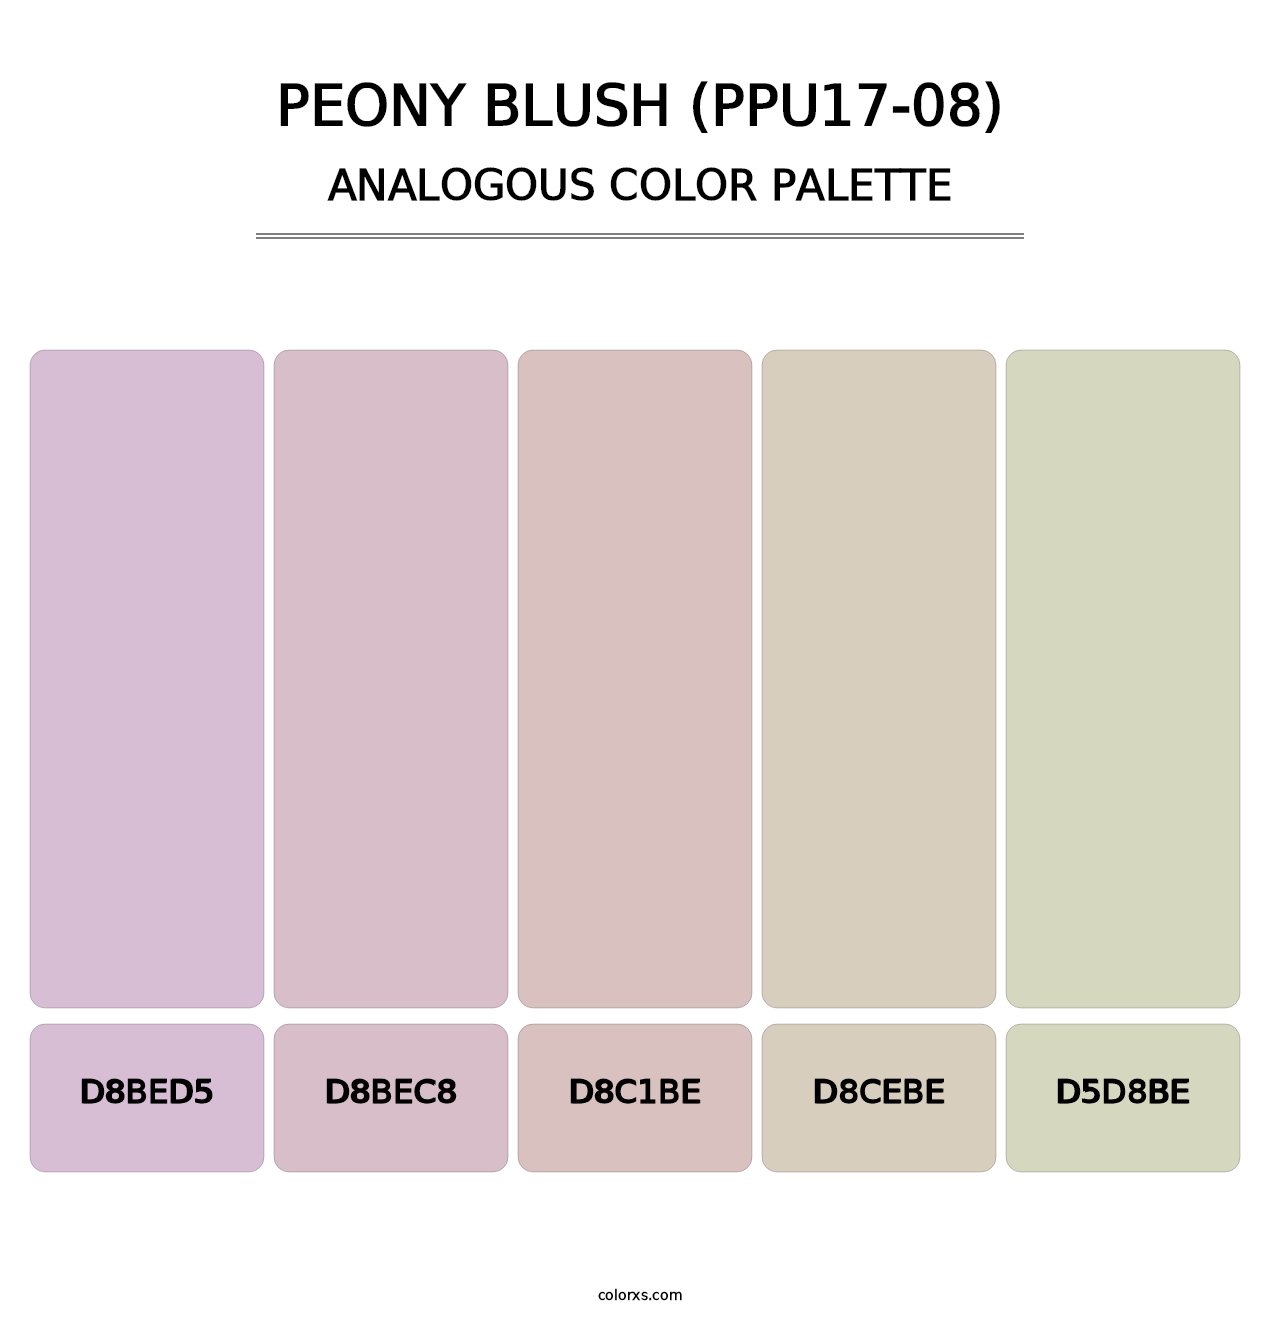 Peony Blush (PPU17-08) - Analogous Color Palette